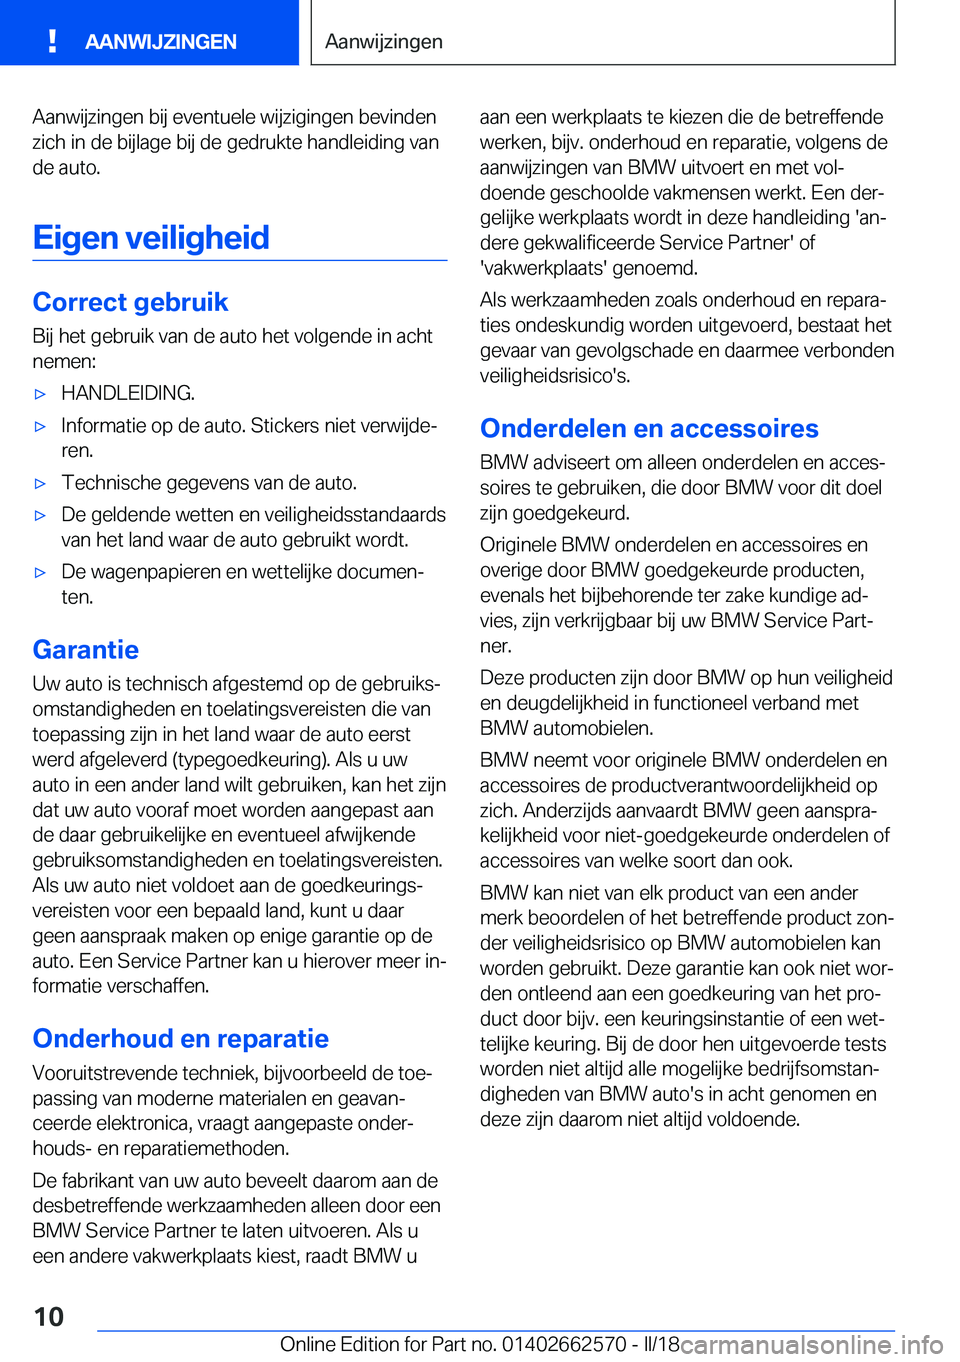 BMW M2 2018  Instructieboekjes (in Dutch) �A�a�n�w�i�j�z�i�n�g�e�n� �b�i�j� �e�v�e�n�t�u�e�l�e� �w�i�j�z�i�g�i�n�g�e�n� �b�e�v�i�n�d�e�n�z�i�c�h� �i�n� �d�e� �b�i�j�l�a�g�e� �b�i�j� �d�e� �g�e�d�r�u�k�t�e� �h�a�n�d�l�e�i�d�i�n�g� �v�a�n
�d�e�